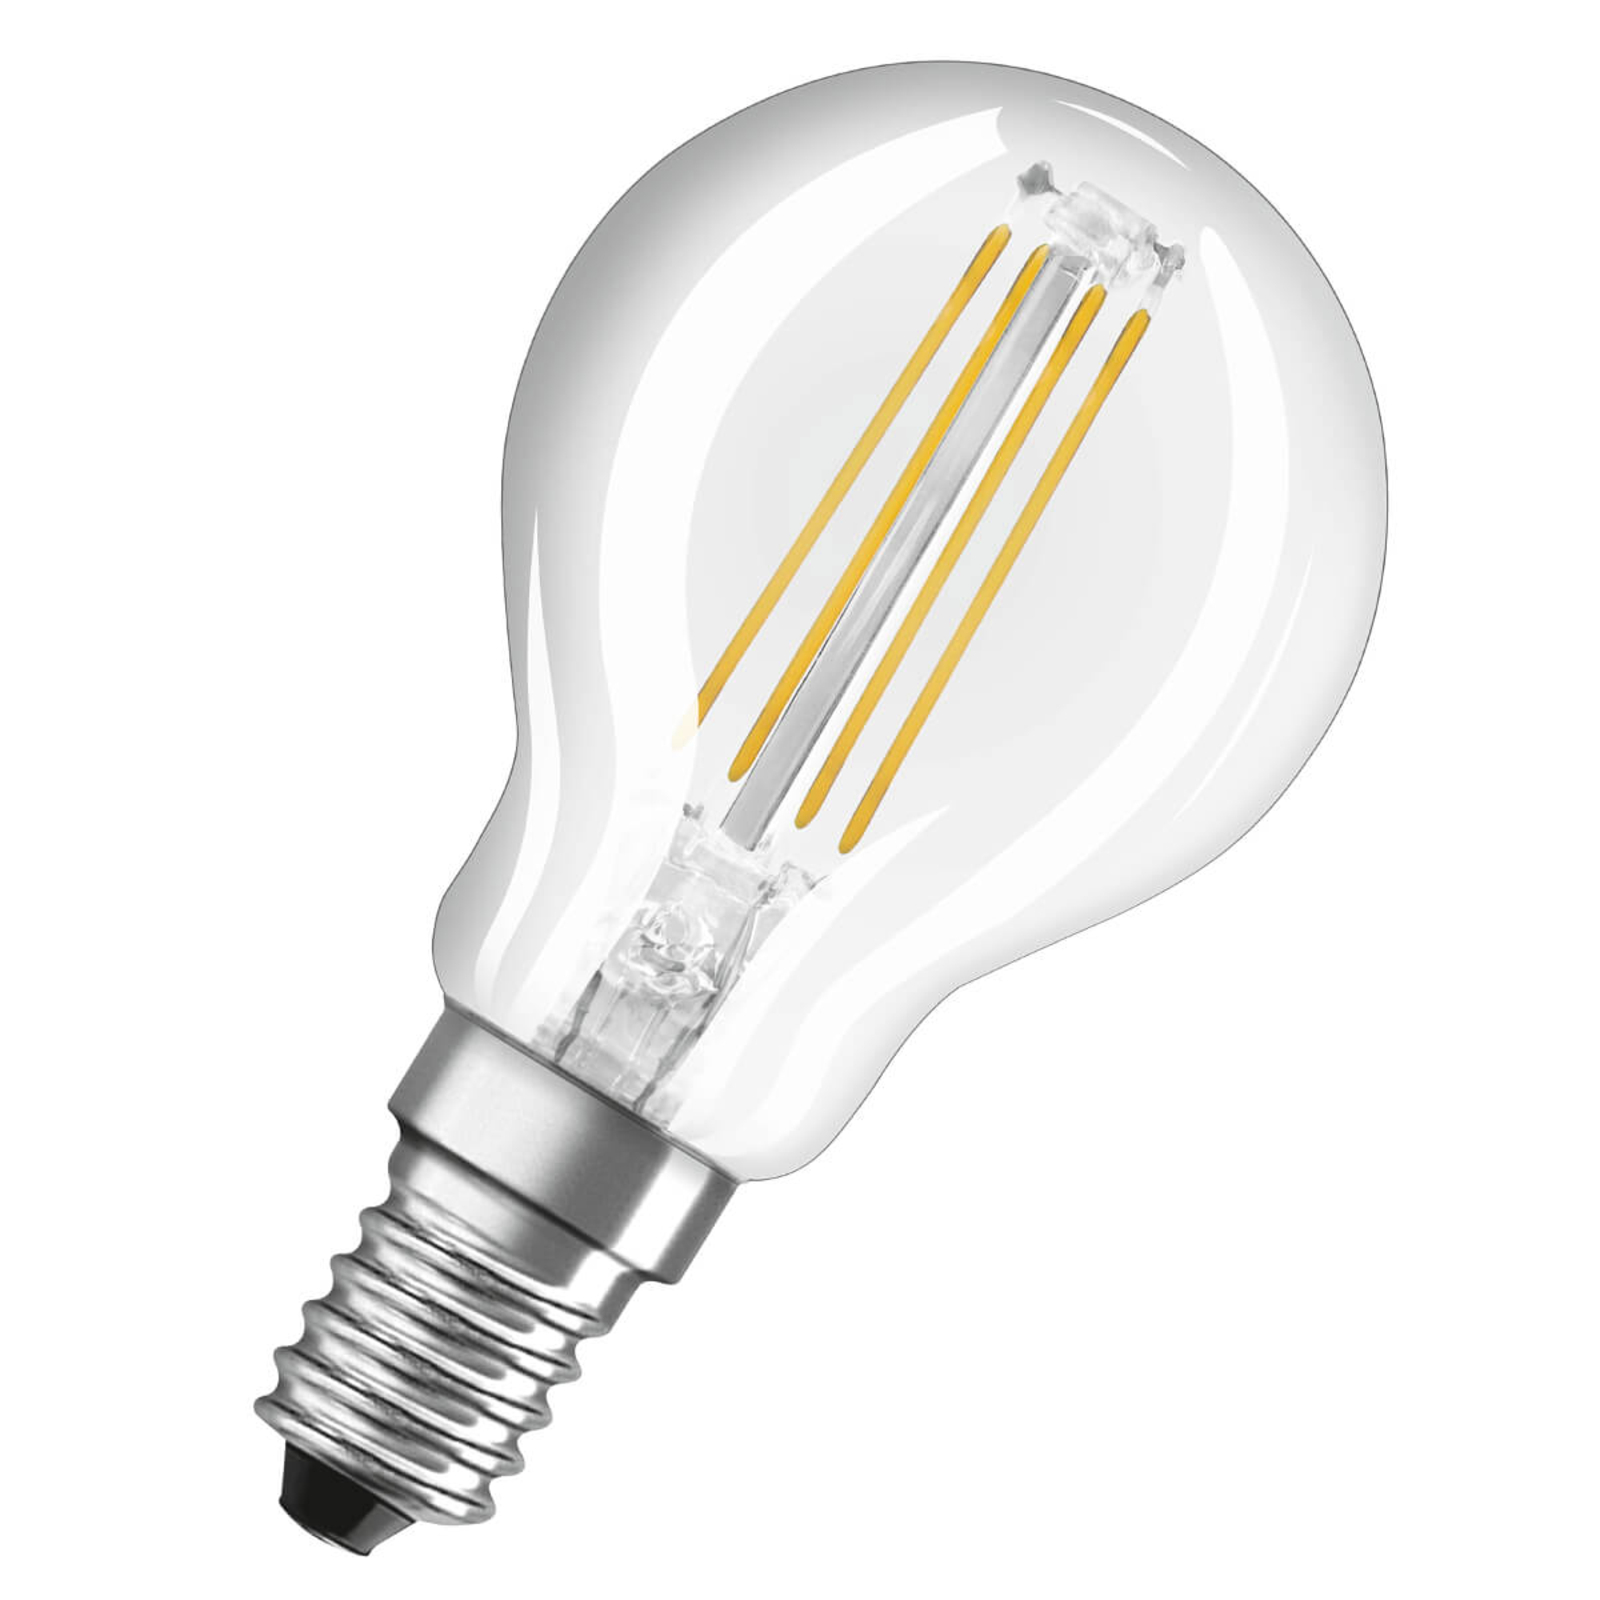 LED filament bulb E14 4 W warm white, set of 3